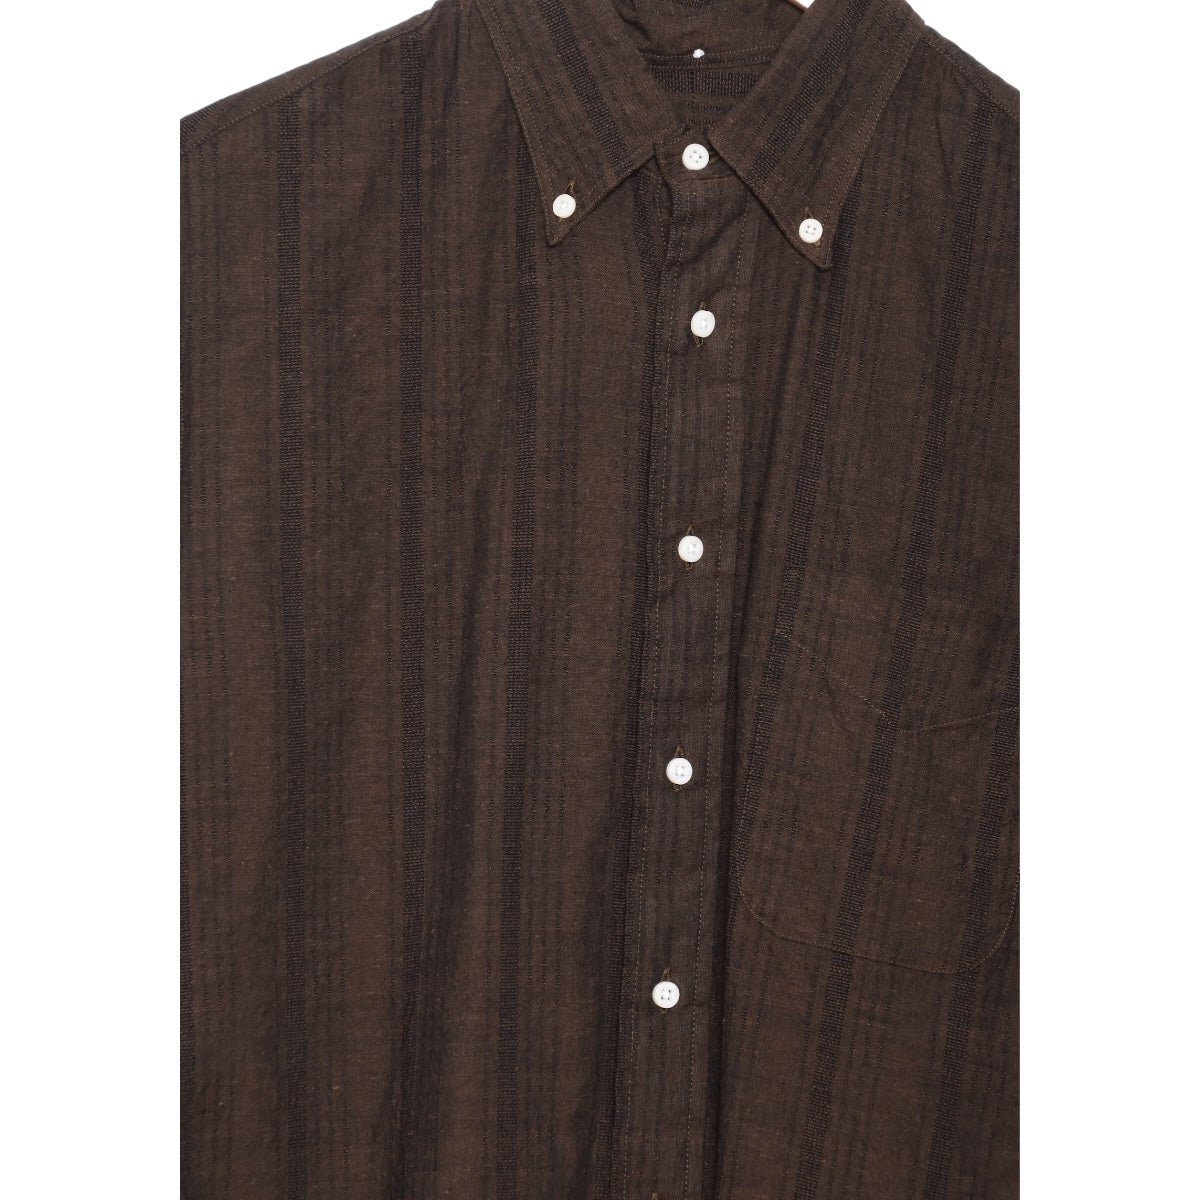 Gitman Brothers Vintage Cotton/Linen Dobby Stripe brown